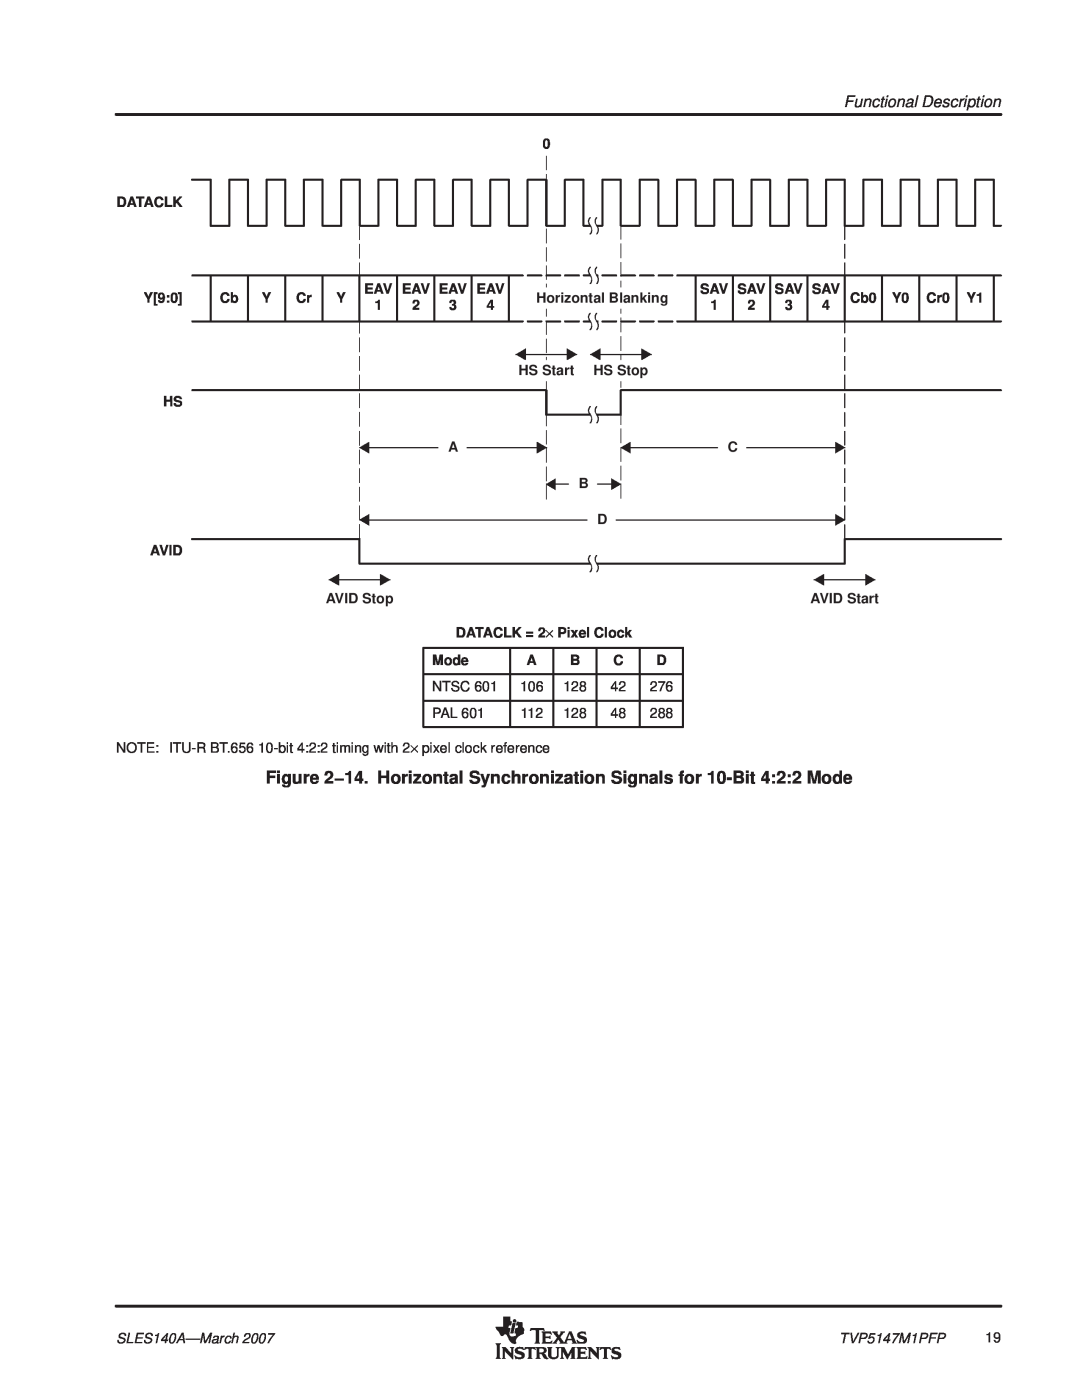 Texas Instruments TVP5147M1PFP manual 14. Horizontal Synchronization Signals for 10-Bit 422 Mode, Ntsc 